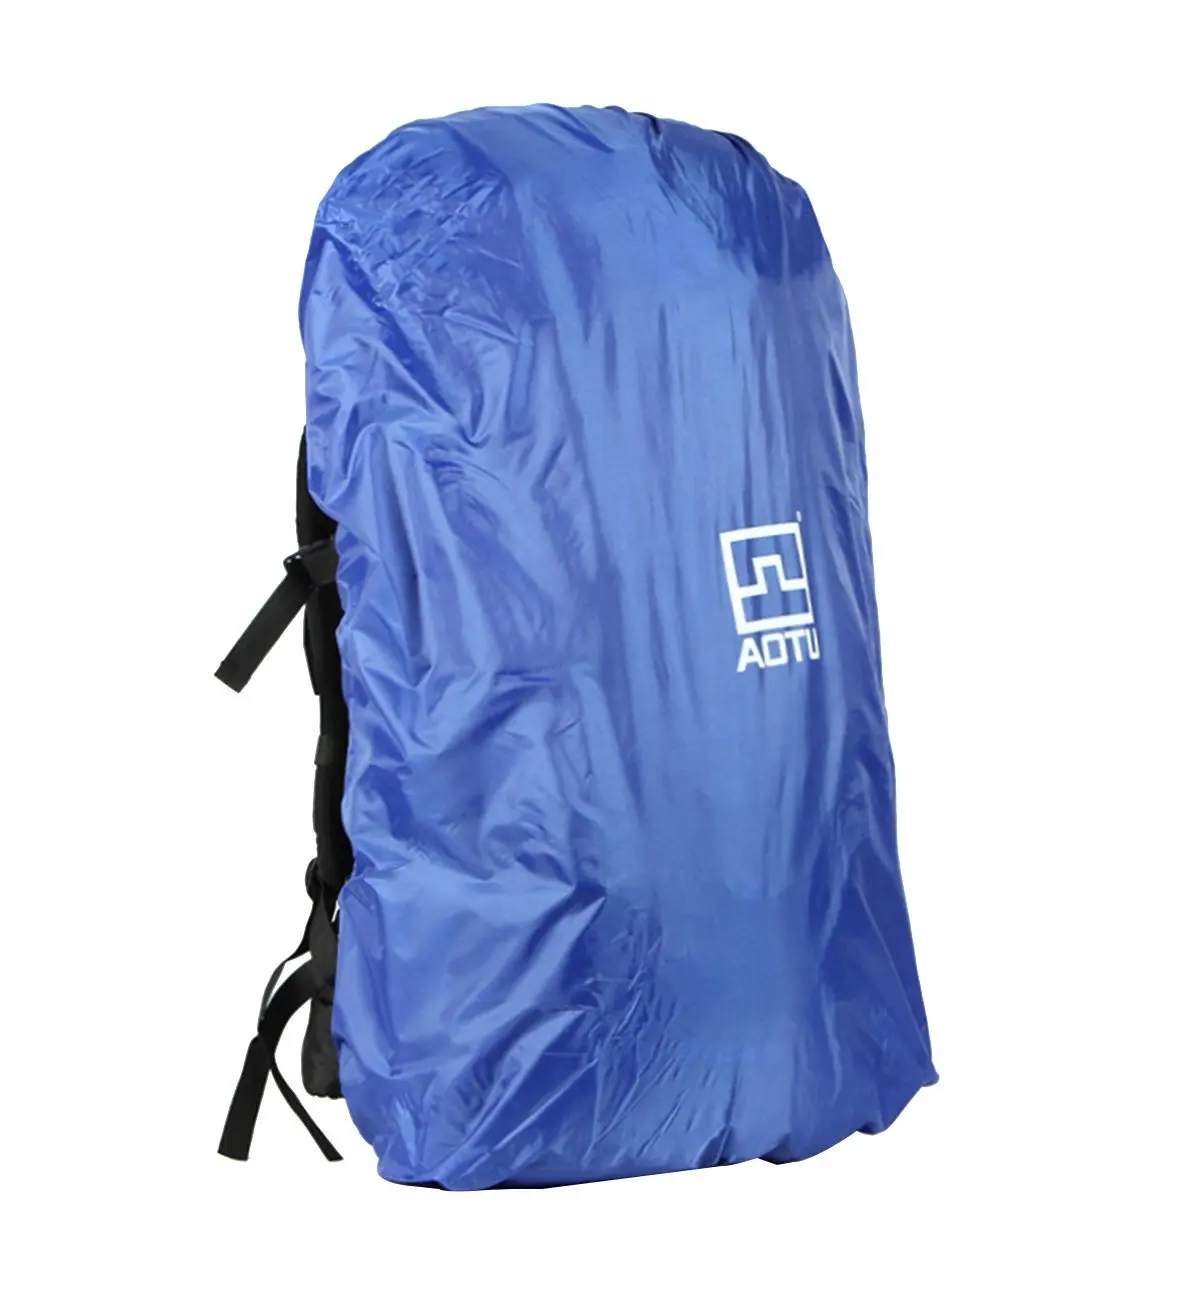 Black Pixnor Waterproof Rain Cover Backpack Cover Rain Cover Rain Cover for Camping Hiking